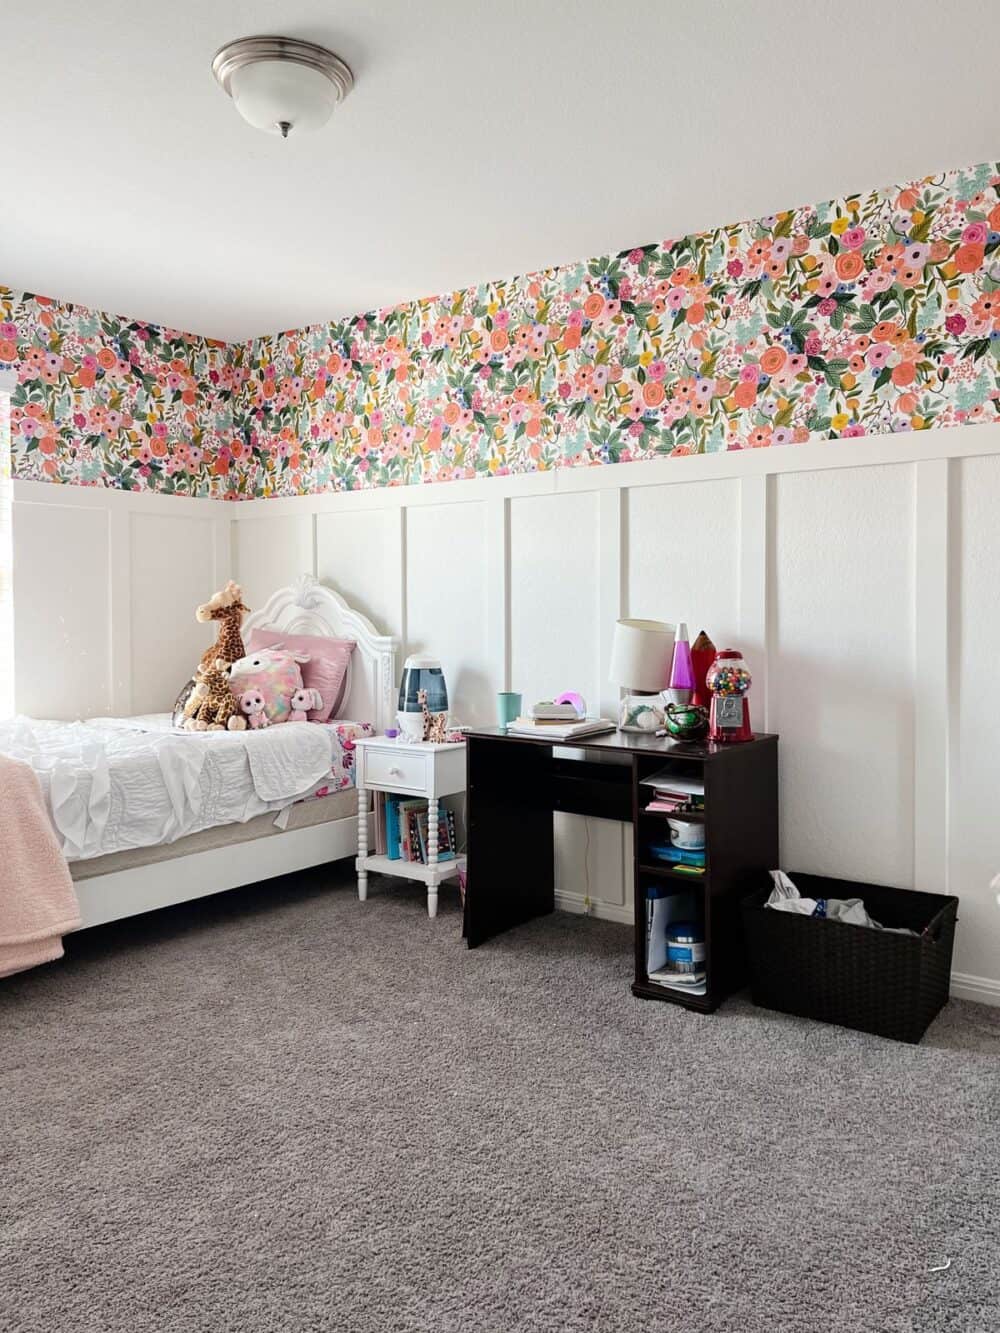 tween girls bedroom with rifle paper co floral wallpaper 